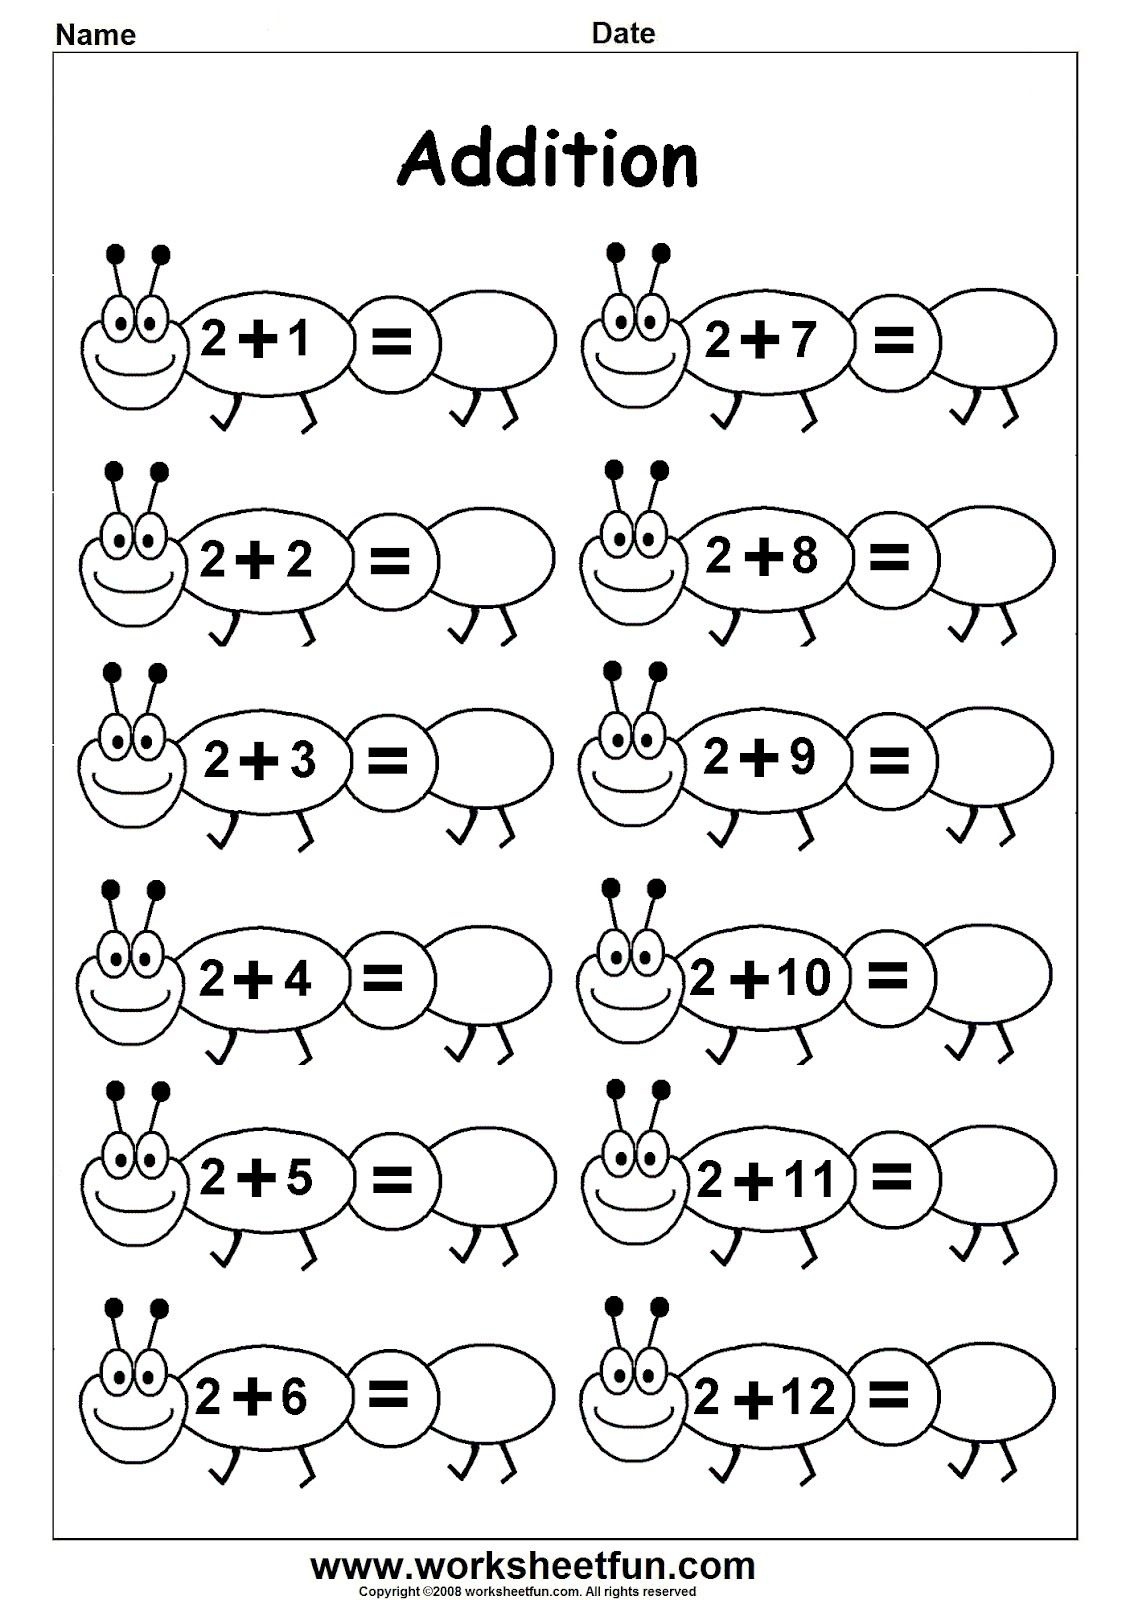 Worksheetfun - Free Printable Worksheets | May Themes | Kindergarten - Free Printable Sheets For Kindergarten